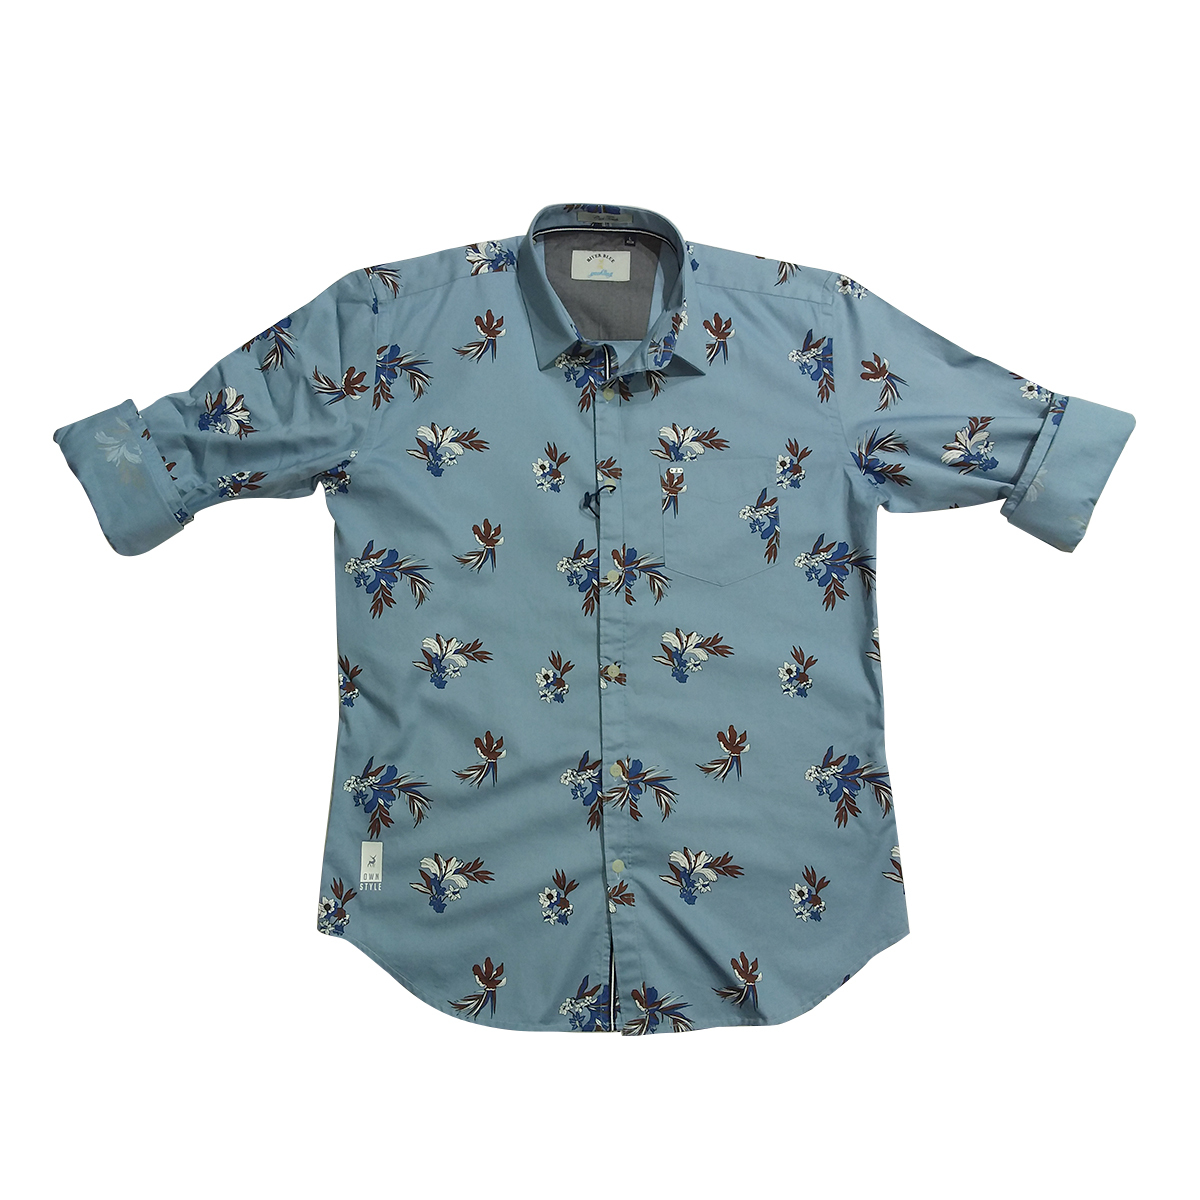 River Blue Mens Shirt  Sm-02990  Full Sleeves Sky